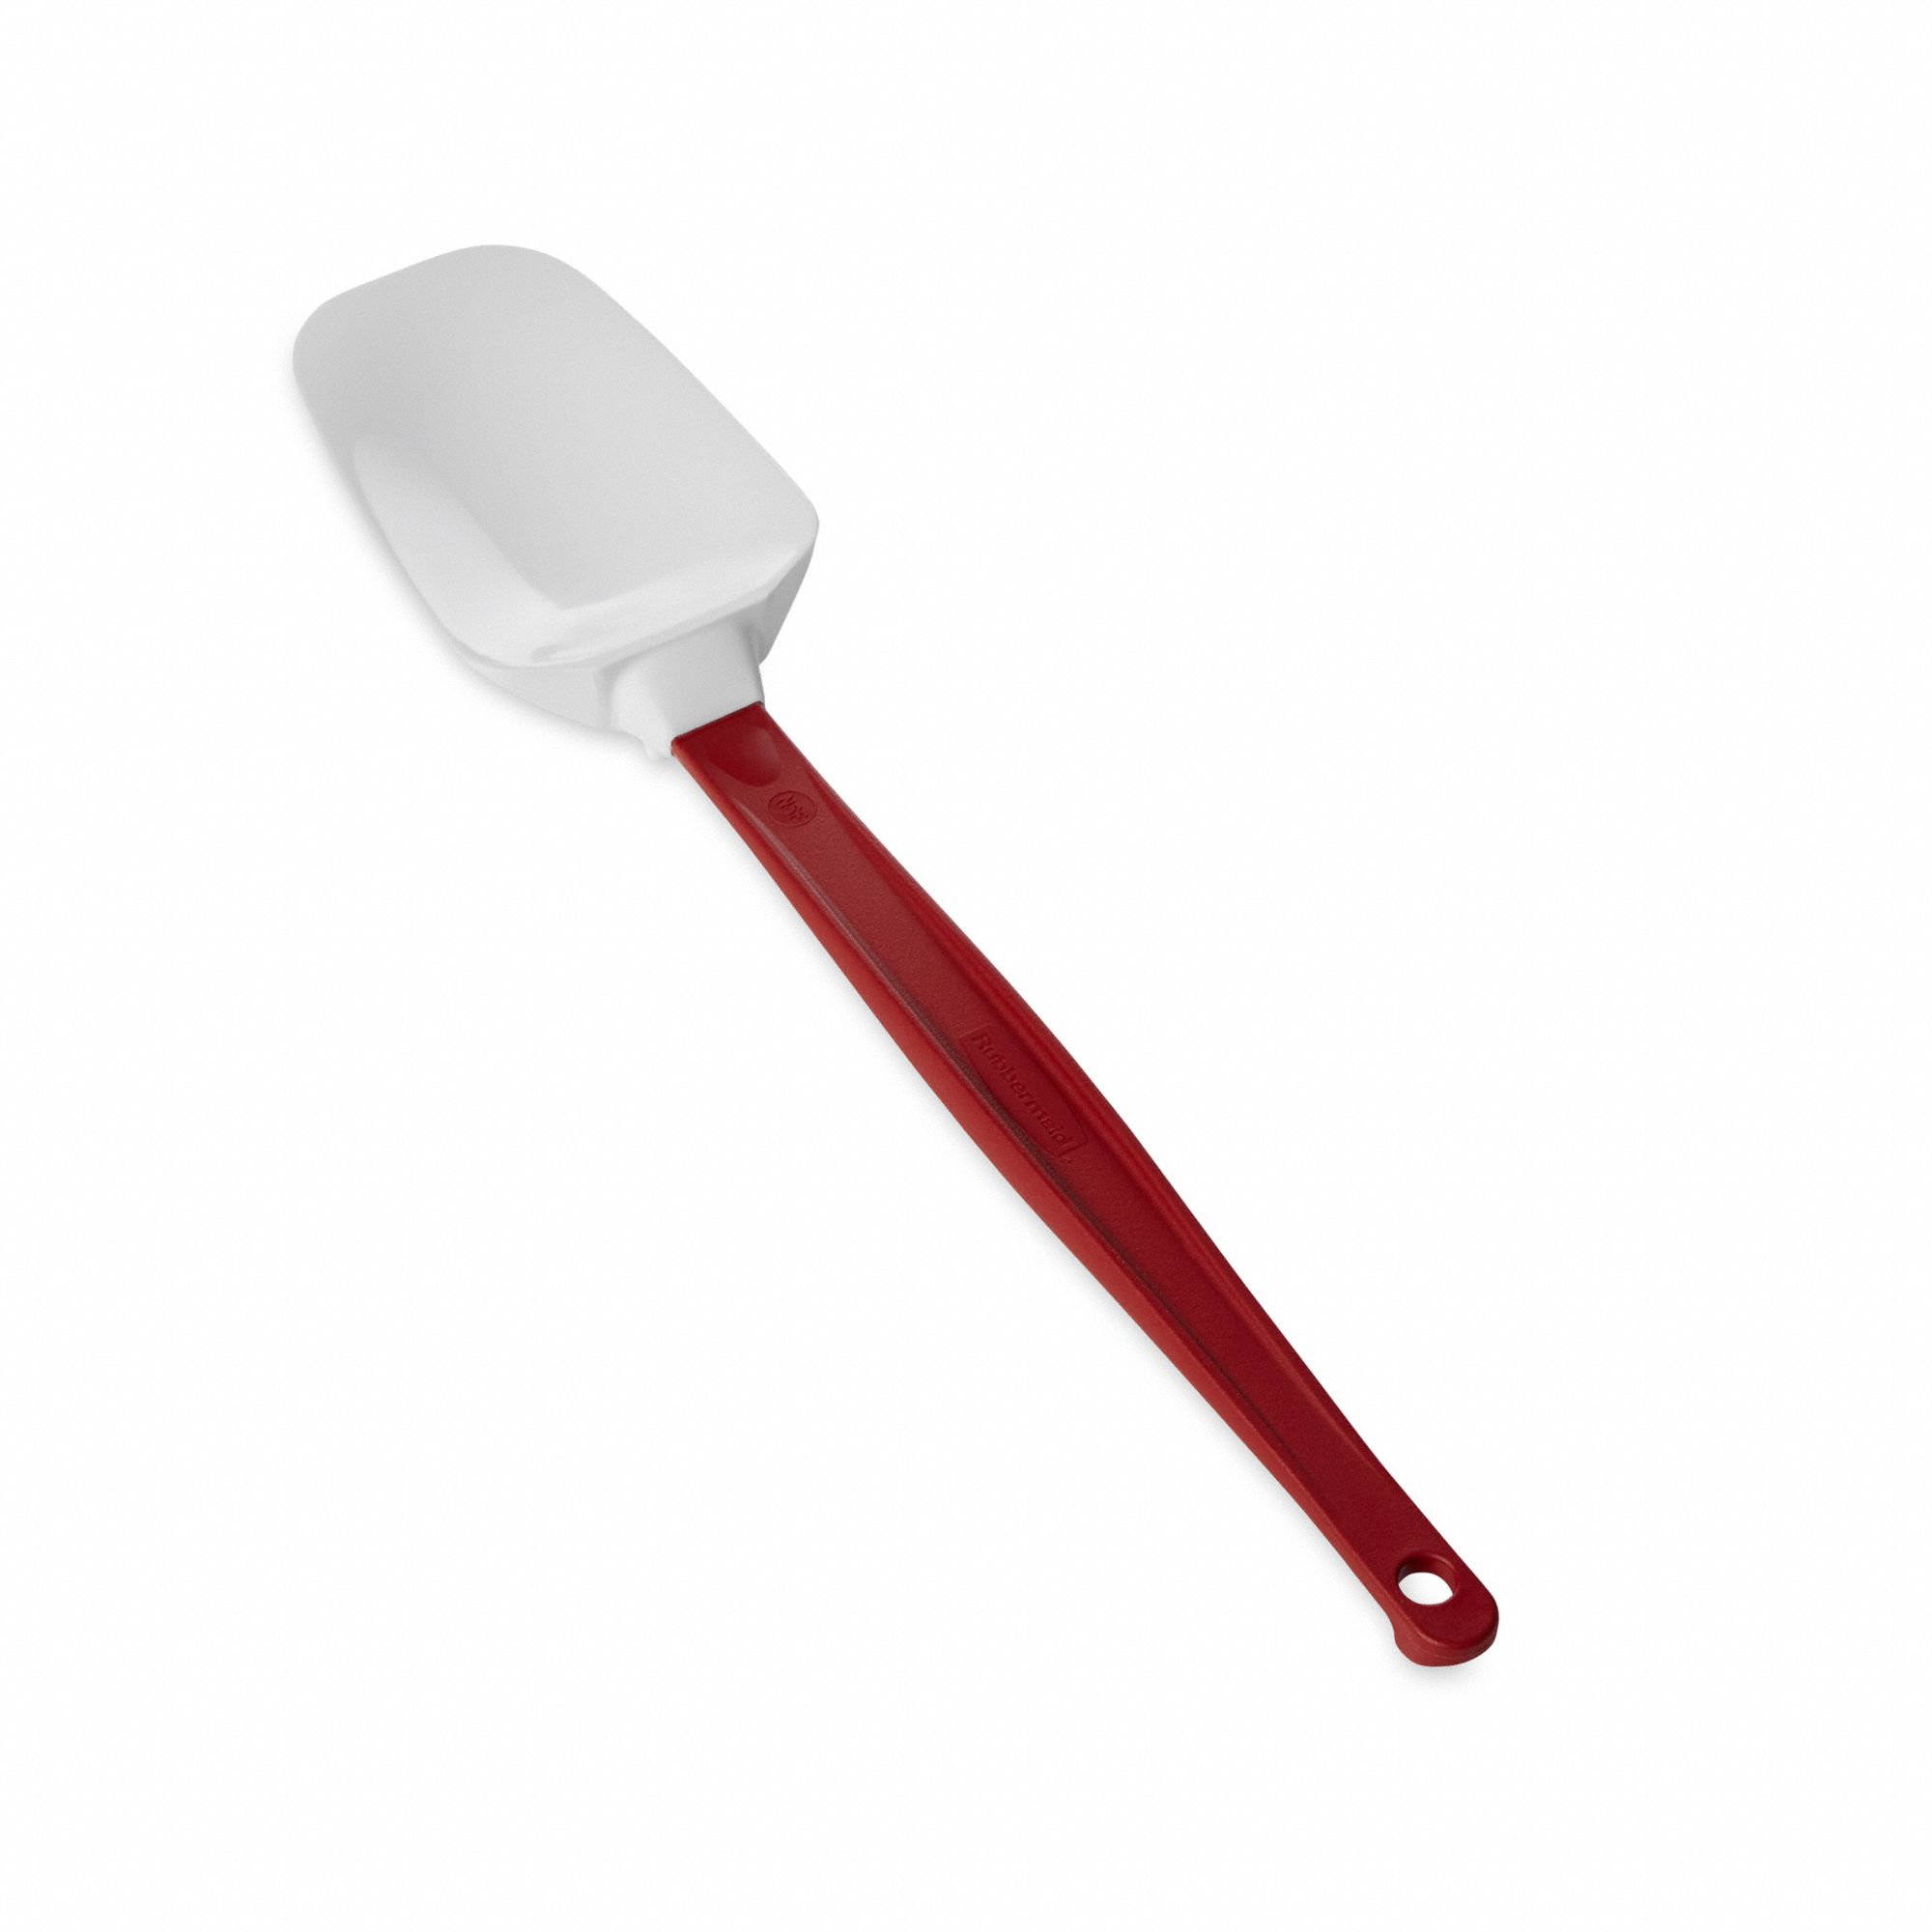 Rubbermaid FG196700RED 13 1/2 Spoon Scraper Spatula - Red Handle